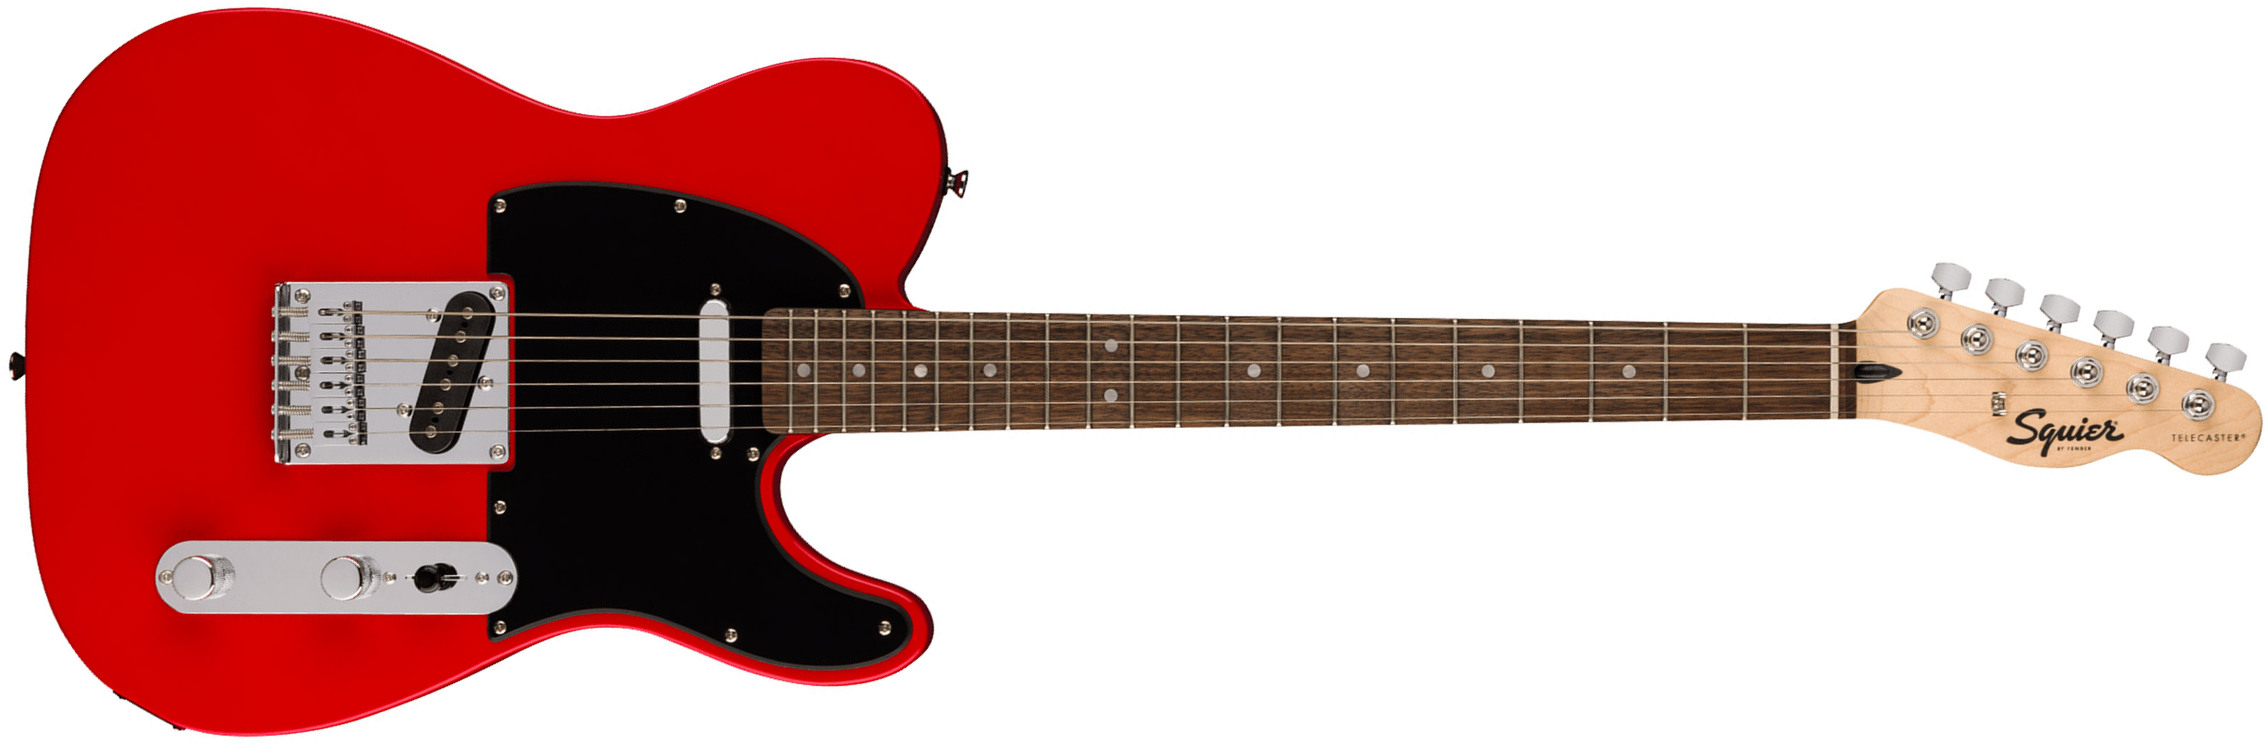 Squier Tele Sonic 2s Ht Lau - Torino Red - Televorm elektrische gitaar - Main picture